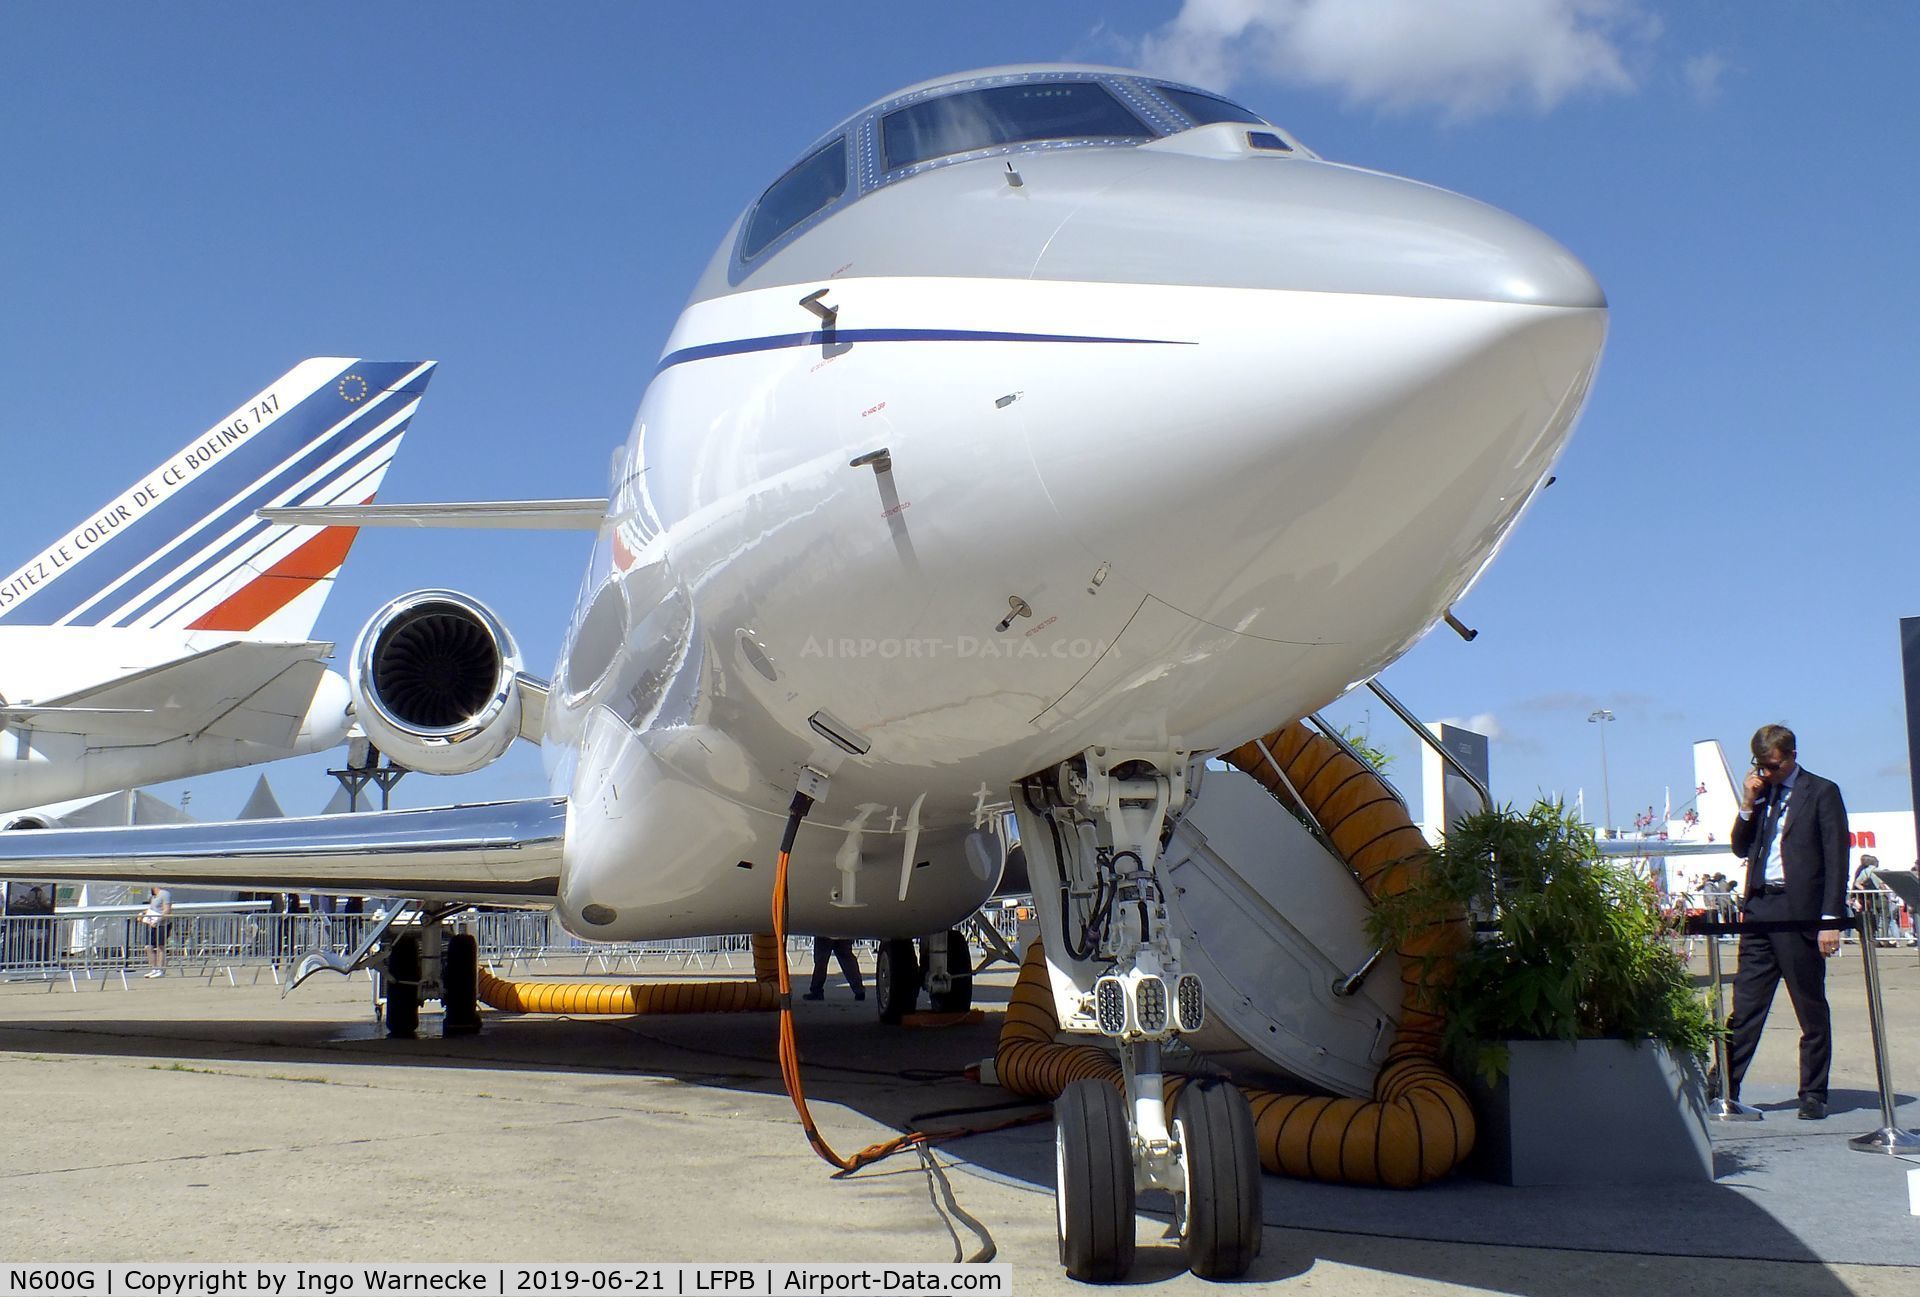 N600G, 2016 Gulfstream Aerospace GVII-G600 C/N 73005, Gulfstream G VII (G600) at the Aerosalon 2019, Paris